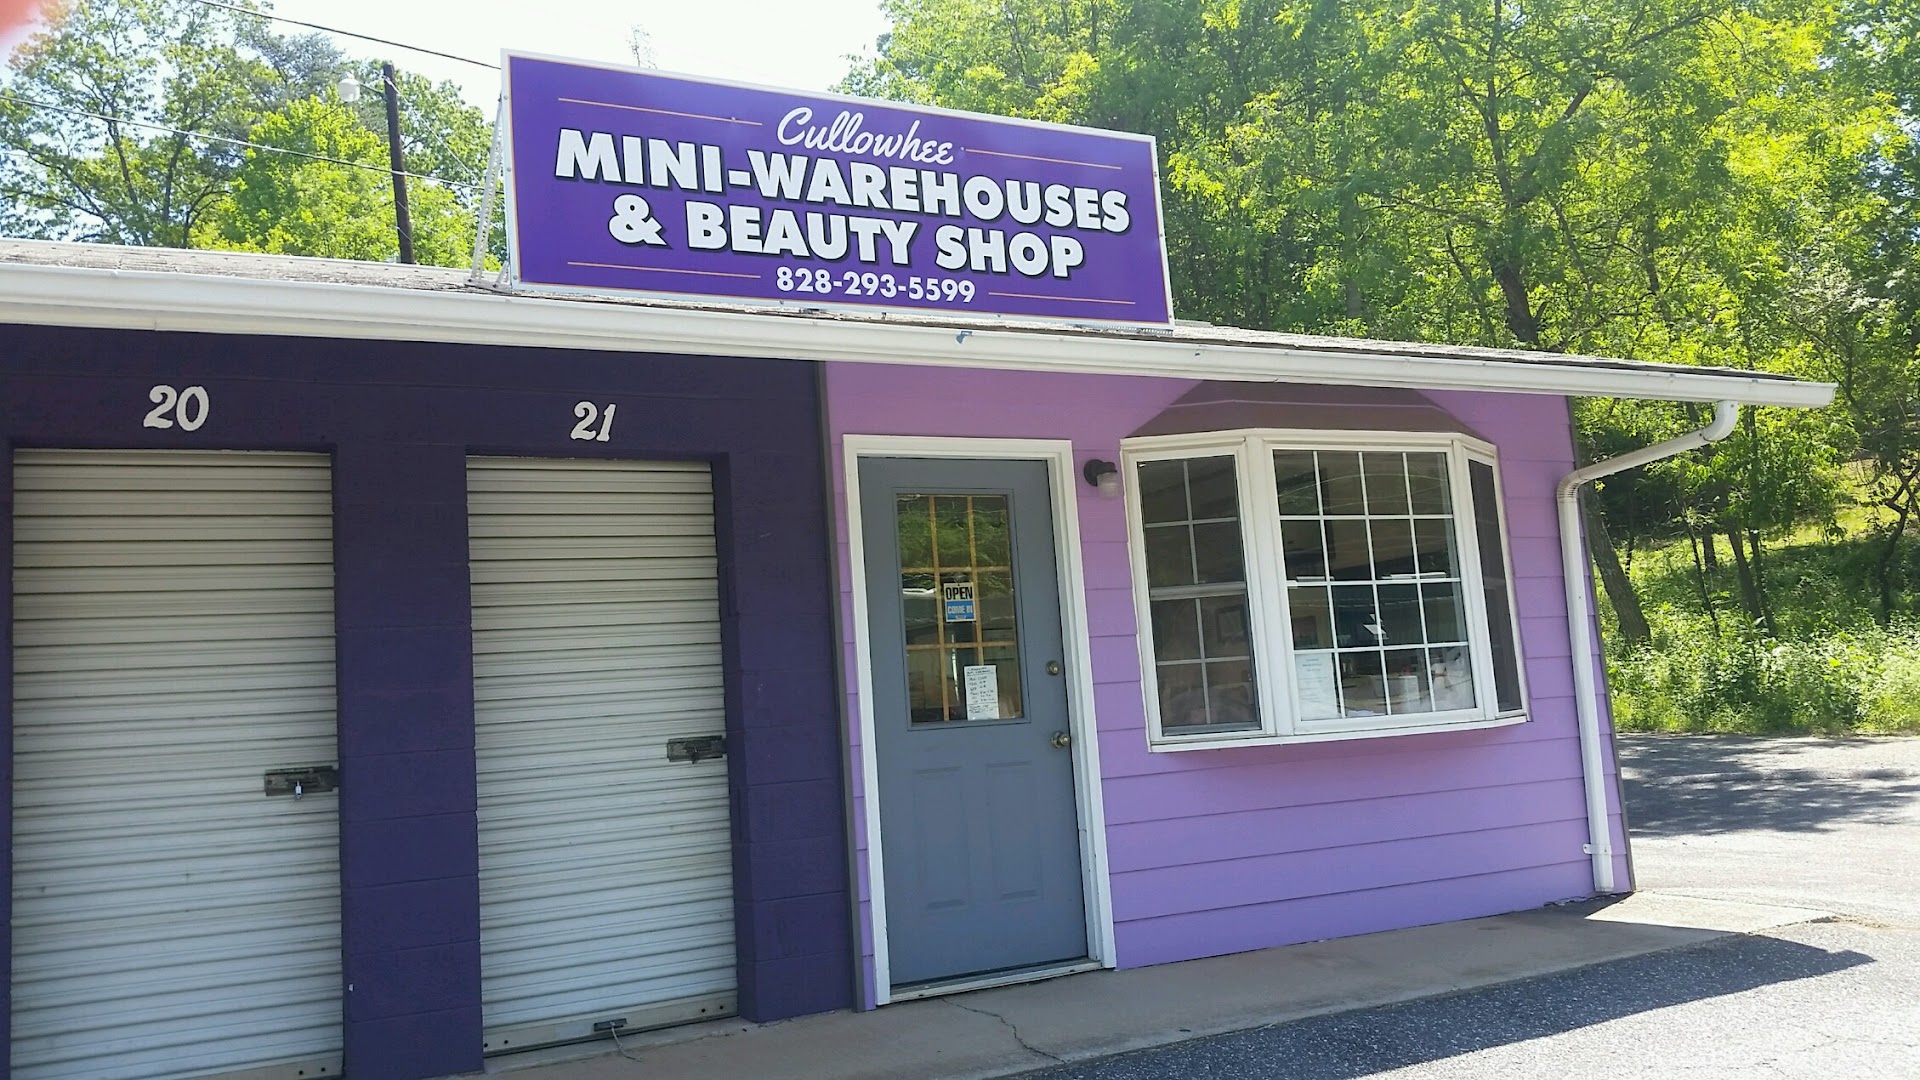 Cullowhee Mini Warehouses & Beauty Shop